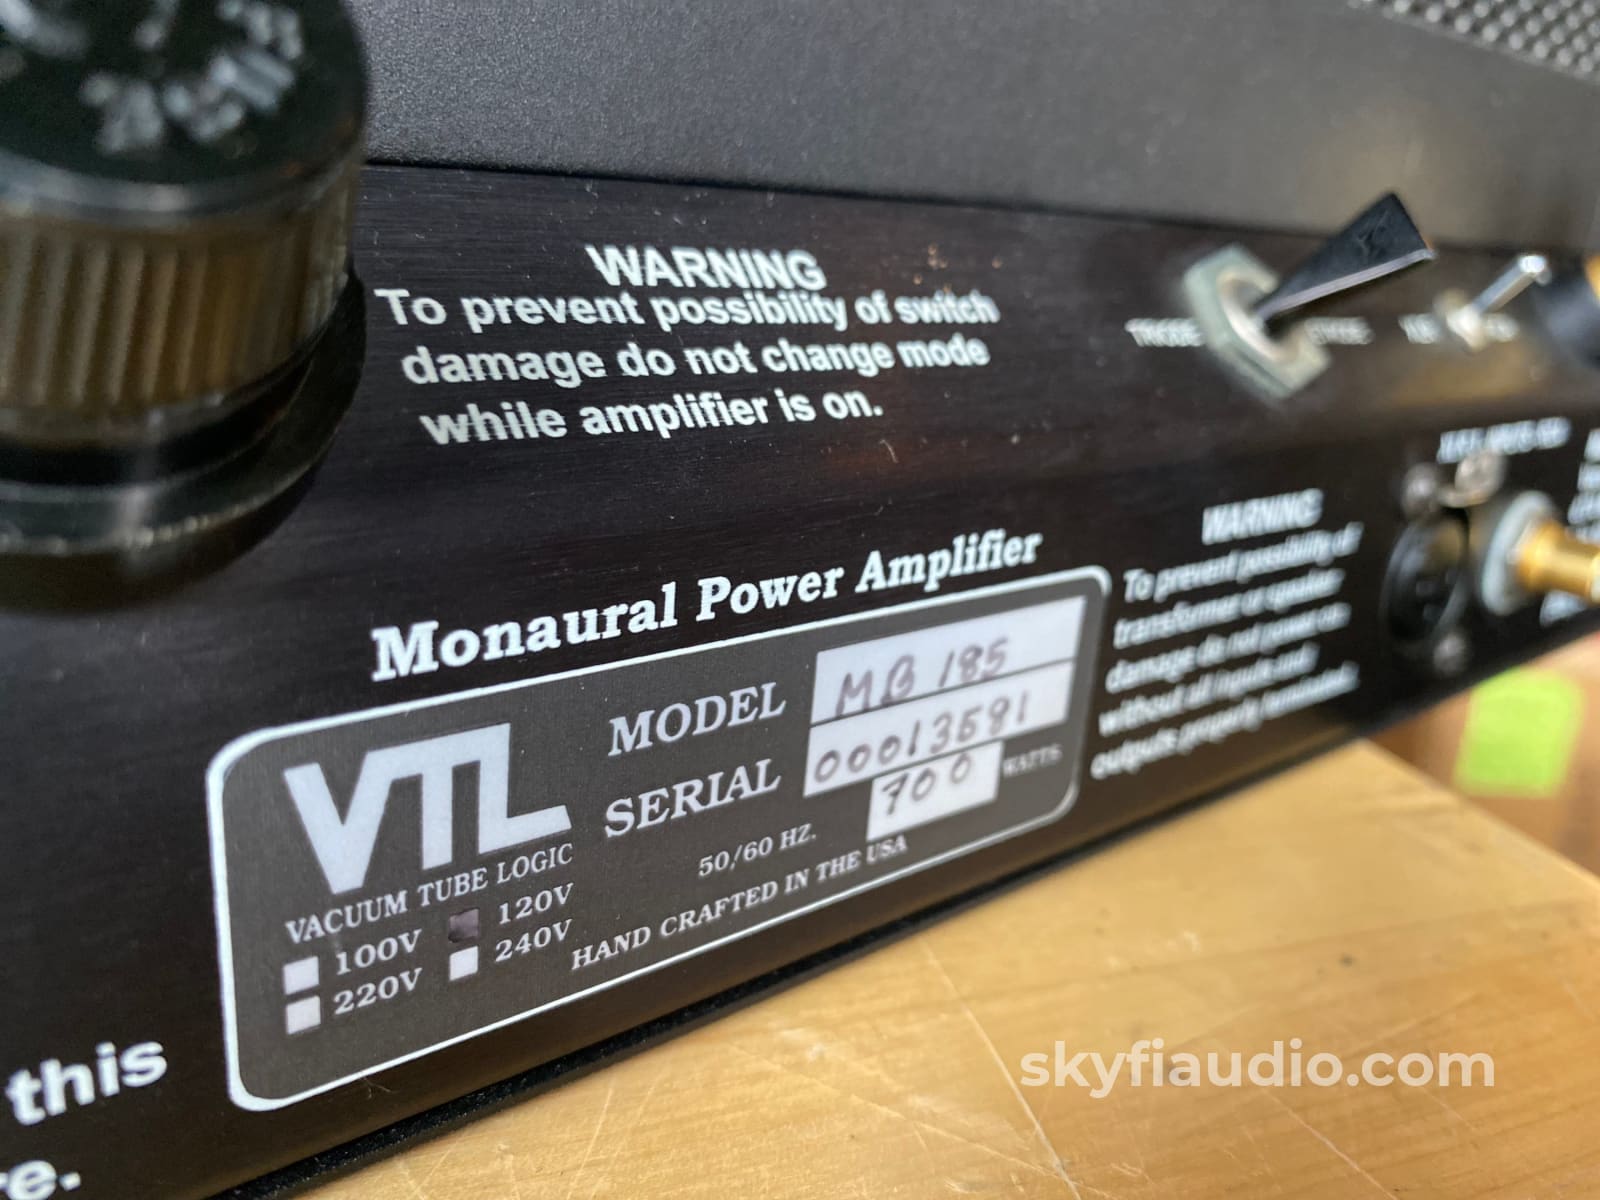 Vtl Mb-185 Signature Tube Monoblock Amplifiers - Super Clean Amplifier